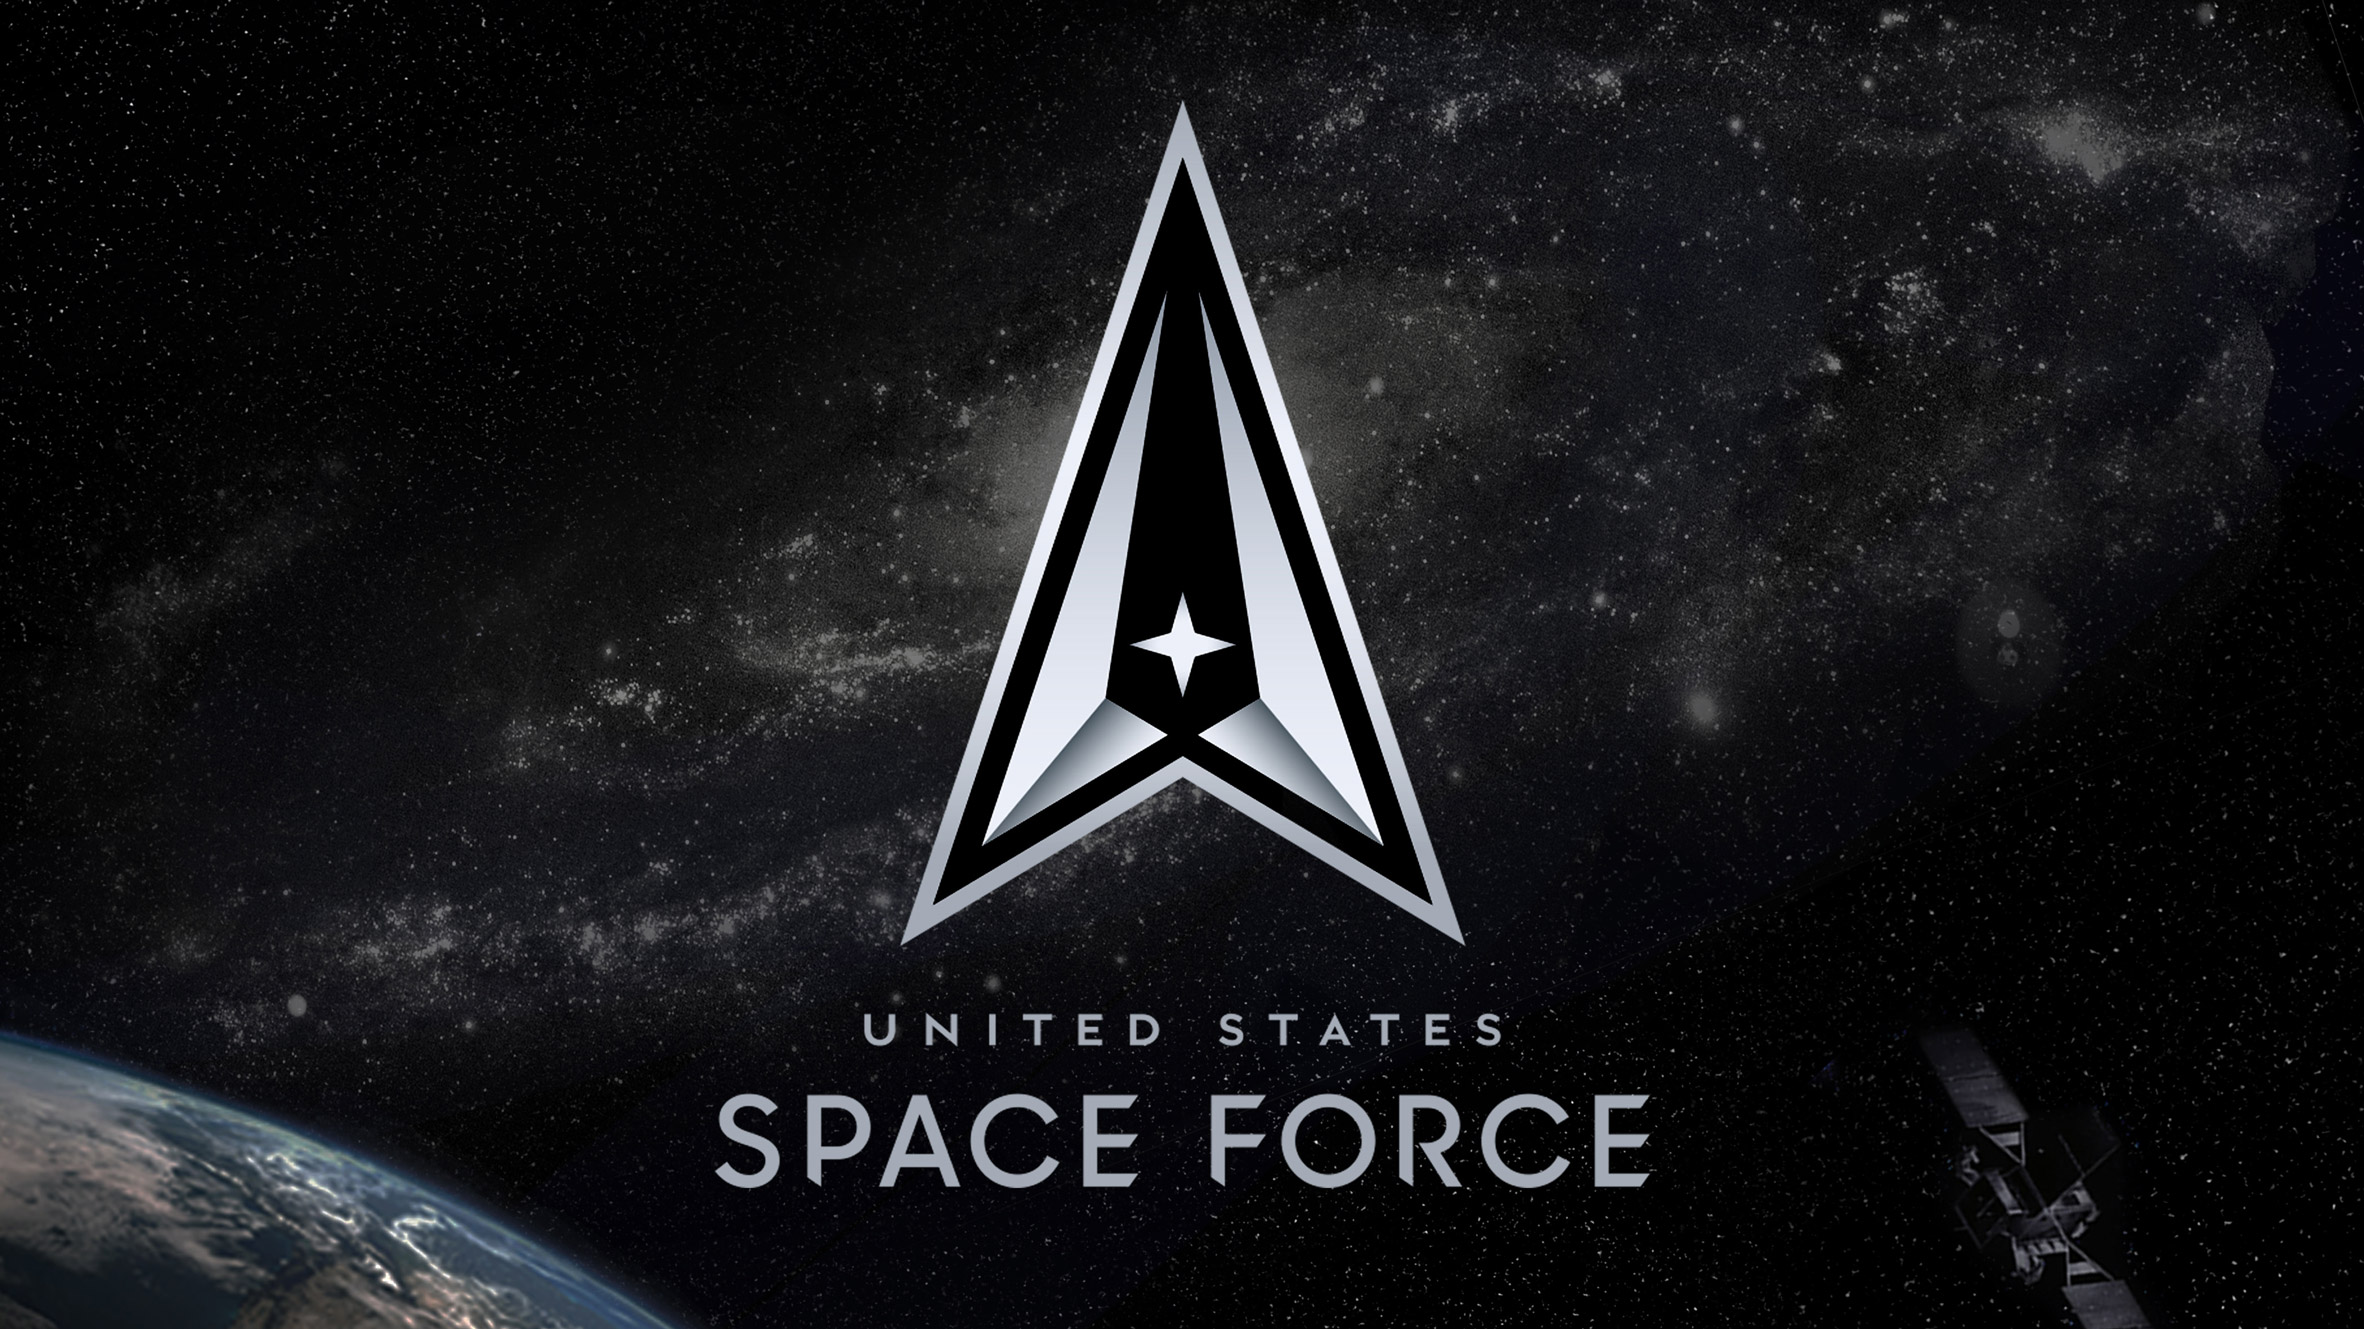 US space force unveils logo